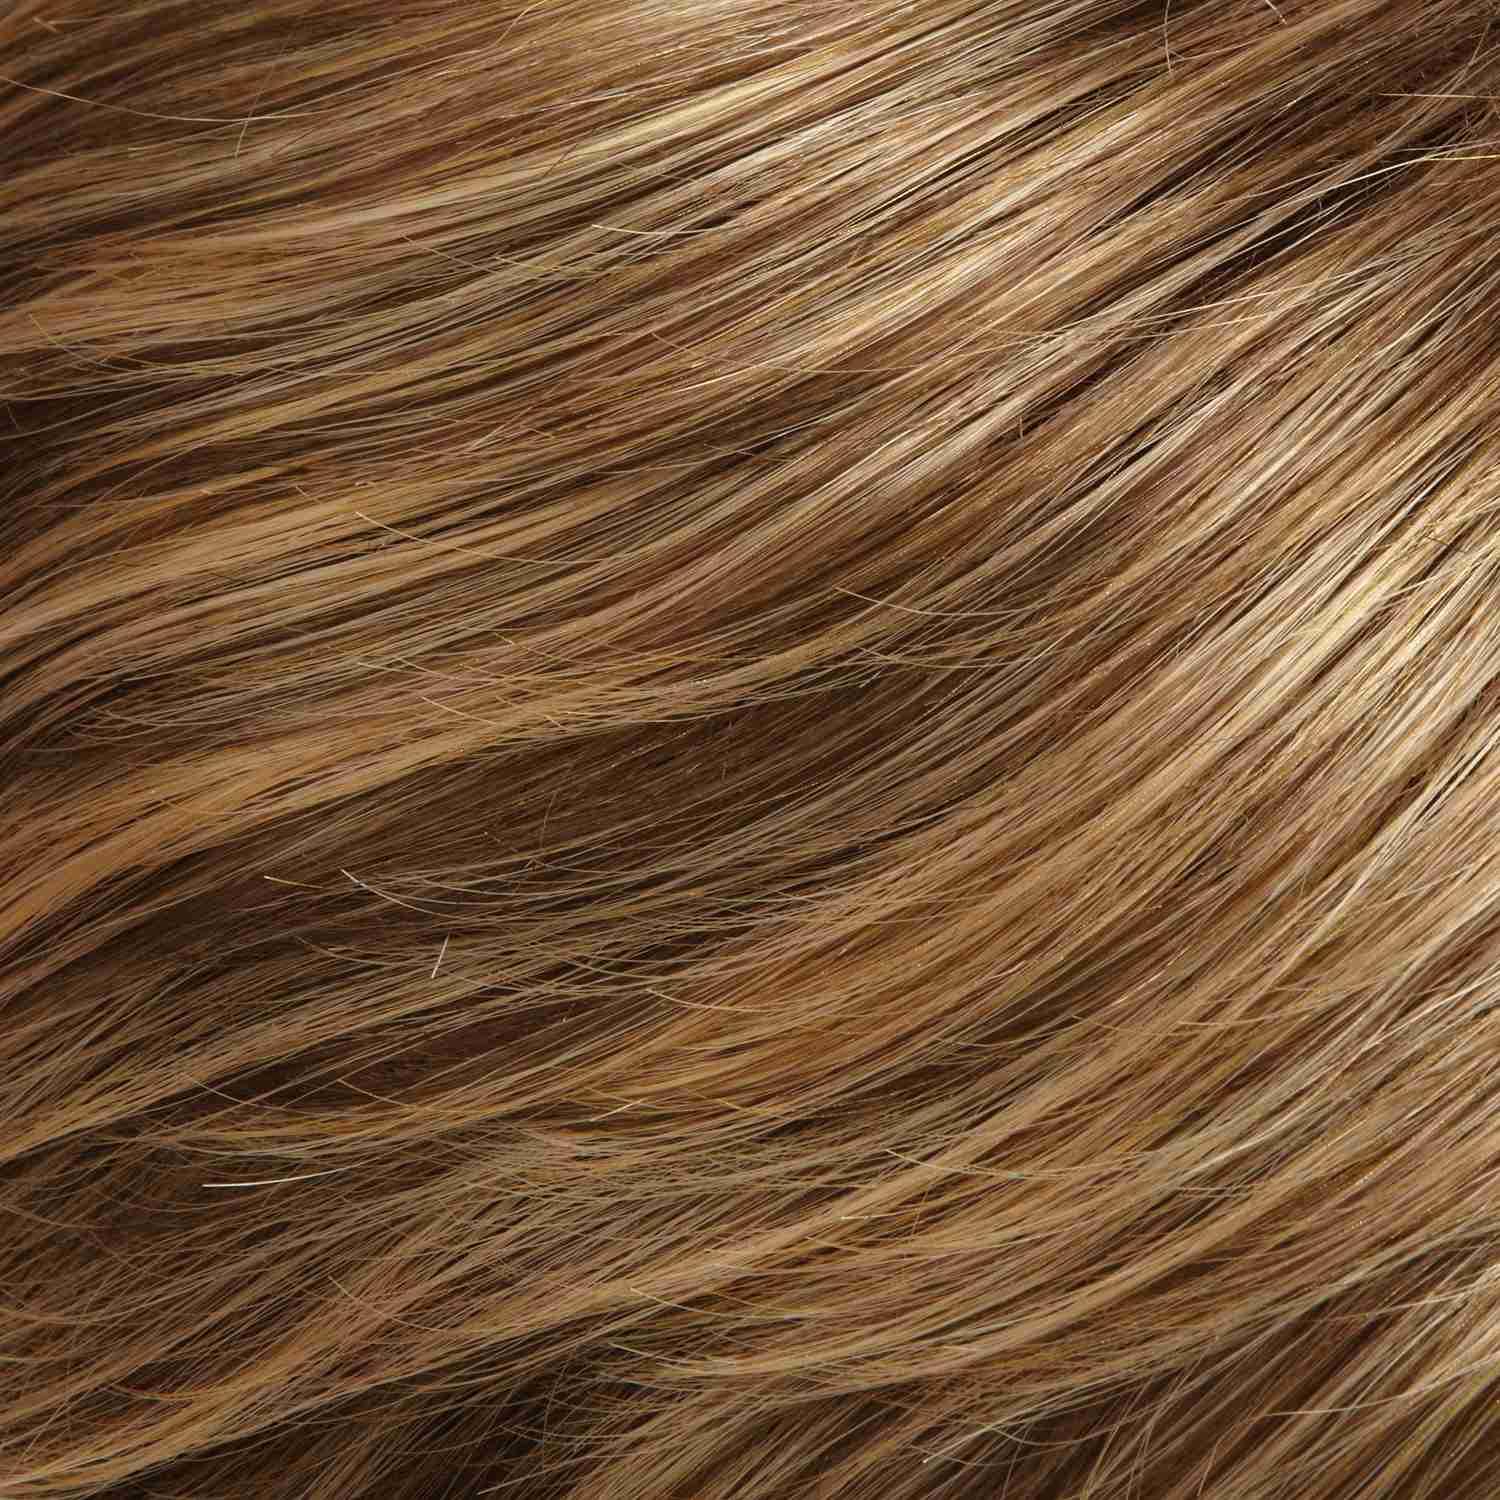 Caelen Wig by Jon Renau | Synthetic (Basic Cap) - Ultimate Looks